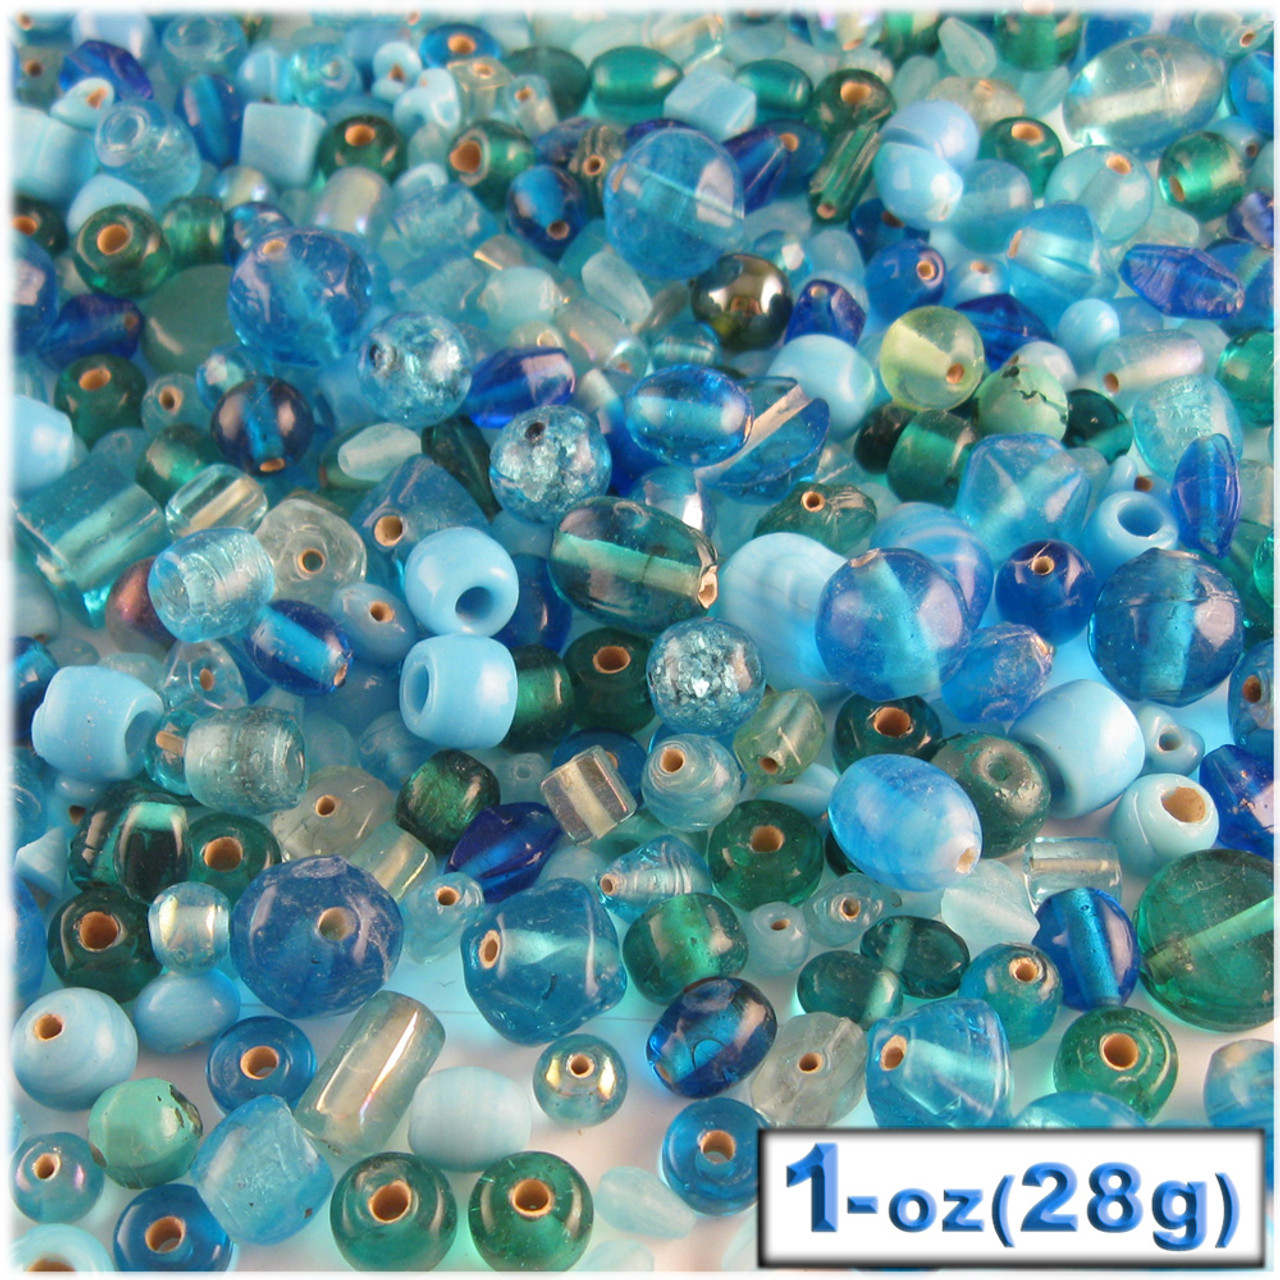 Buy Glass Seed Beads 1/2-lb bag at S&S Worldwide